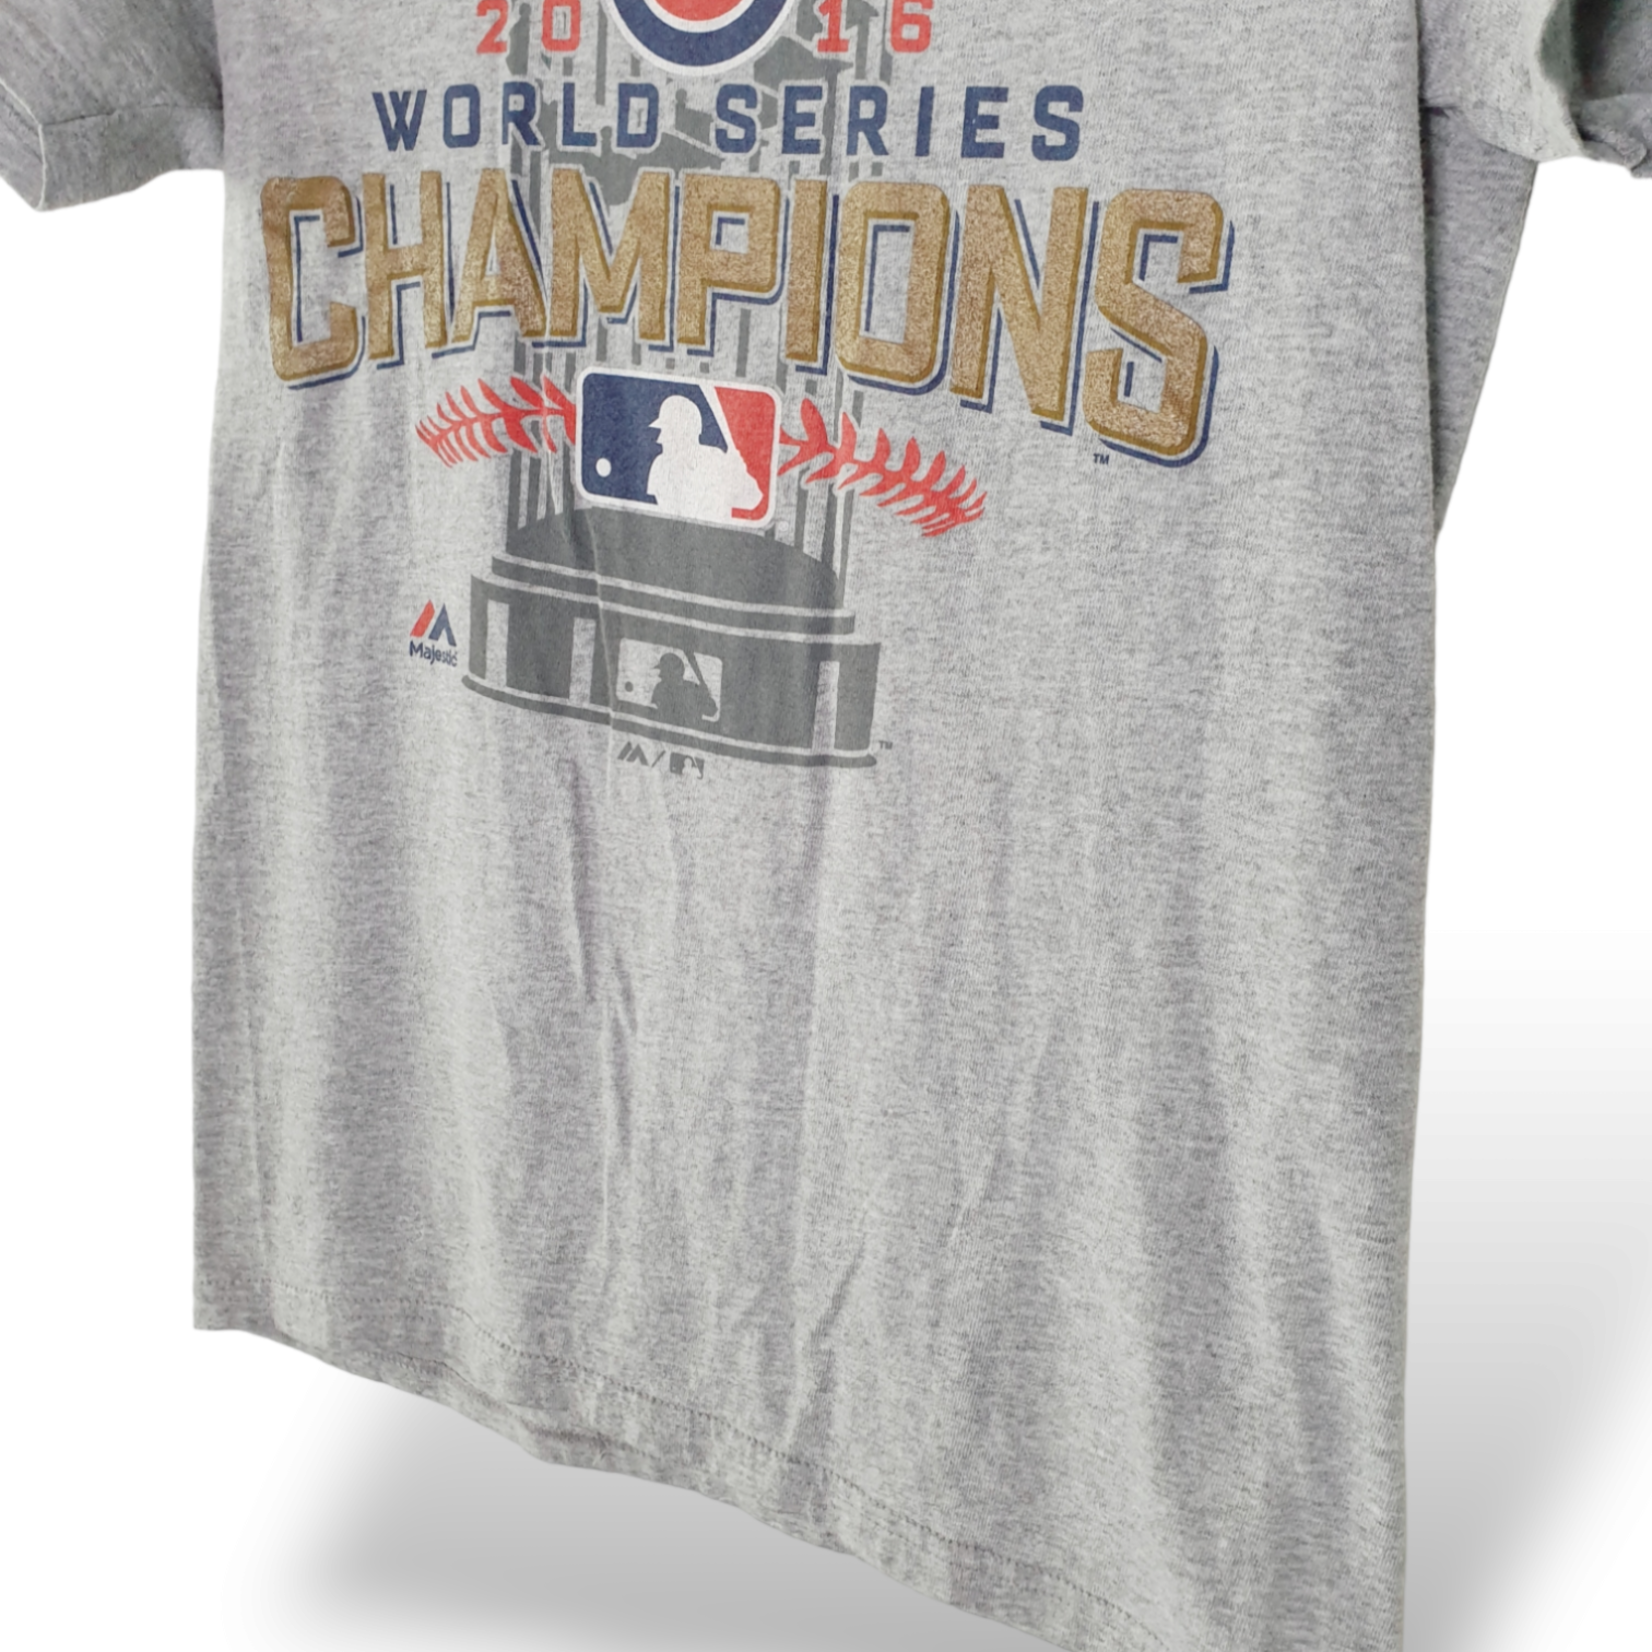 Majestic Original Majestic vintage shirt MLB World Series 2016